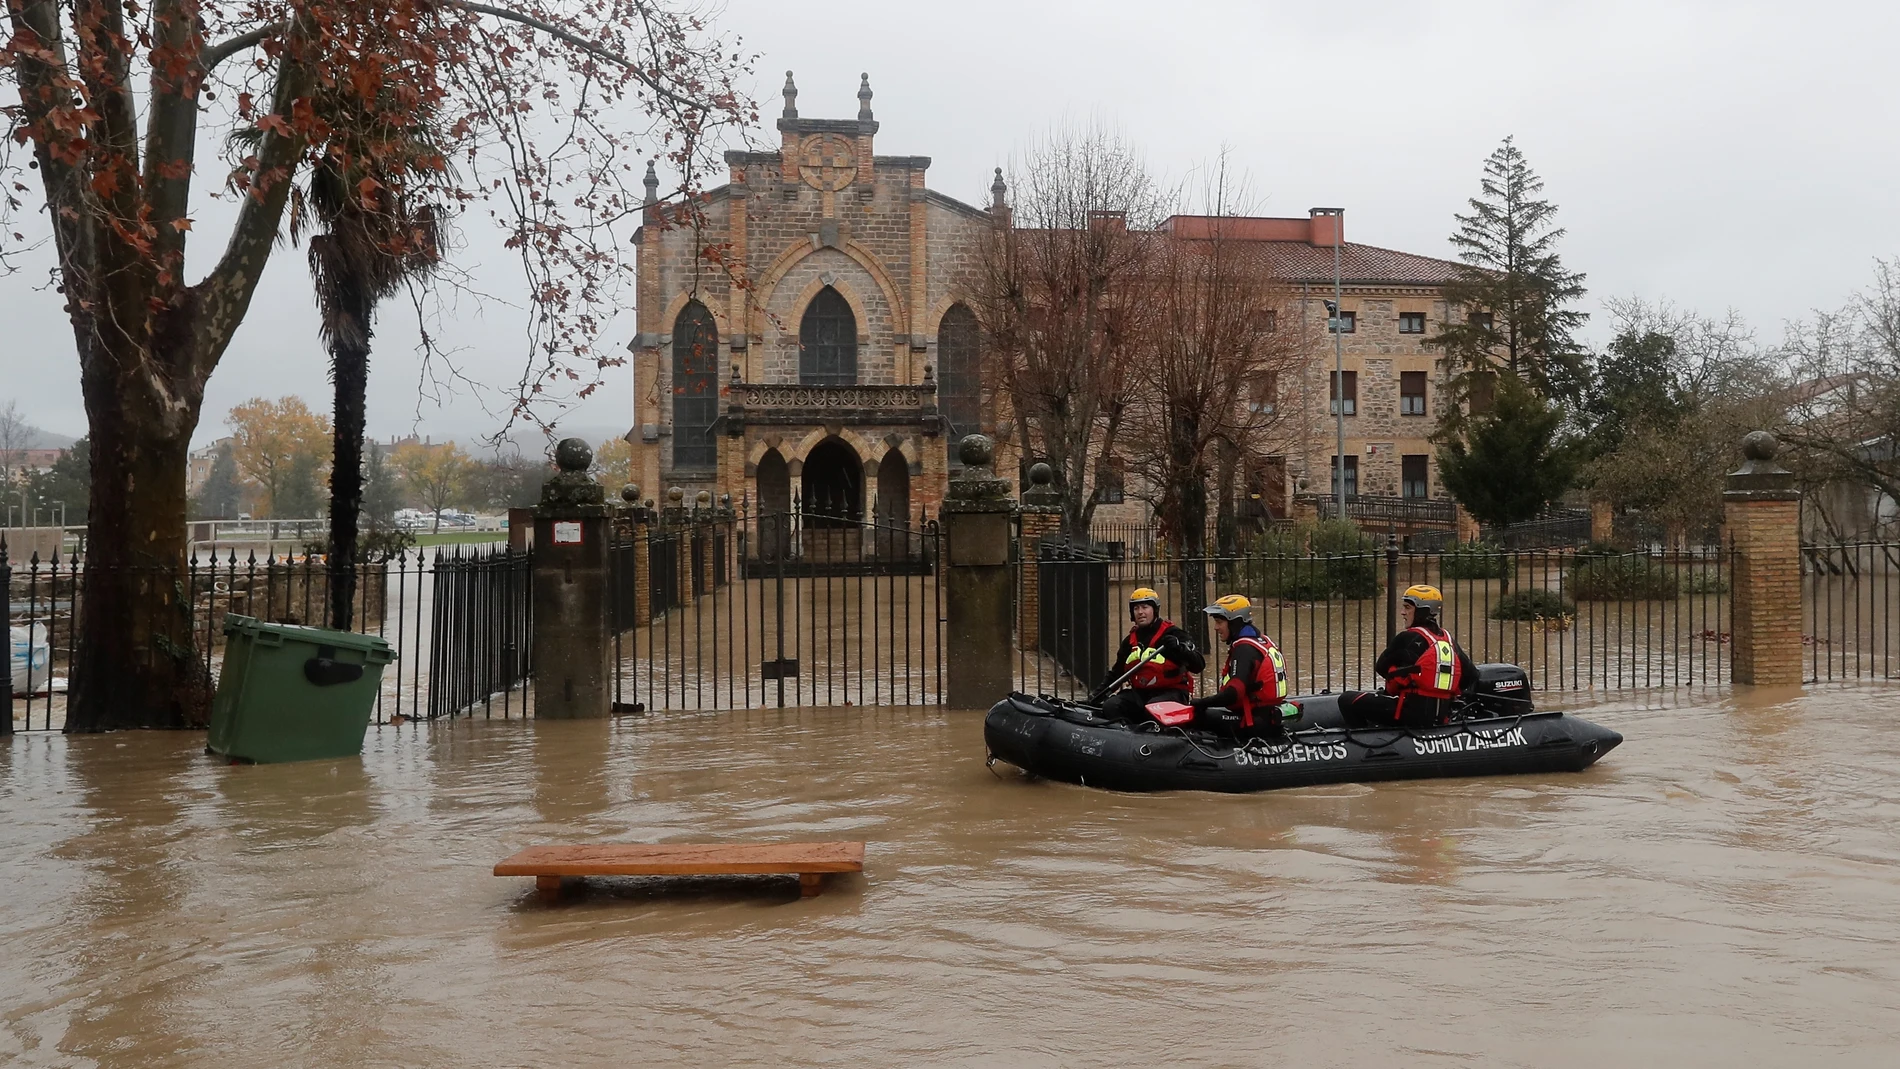 Calles inundadas en Pamplona